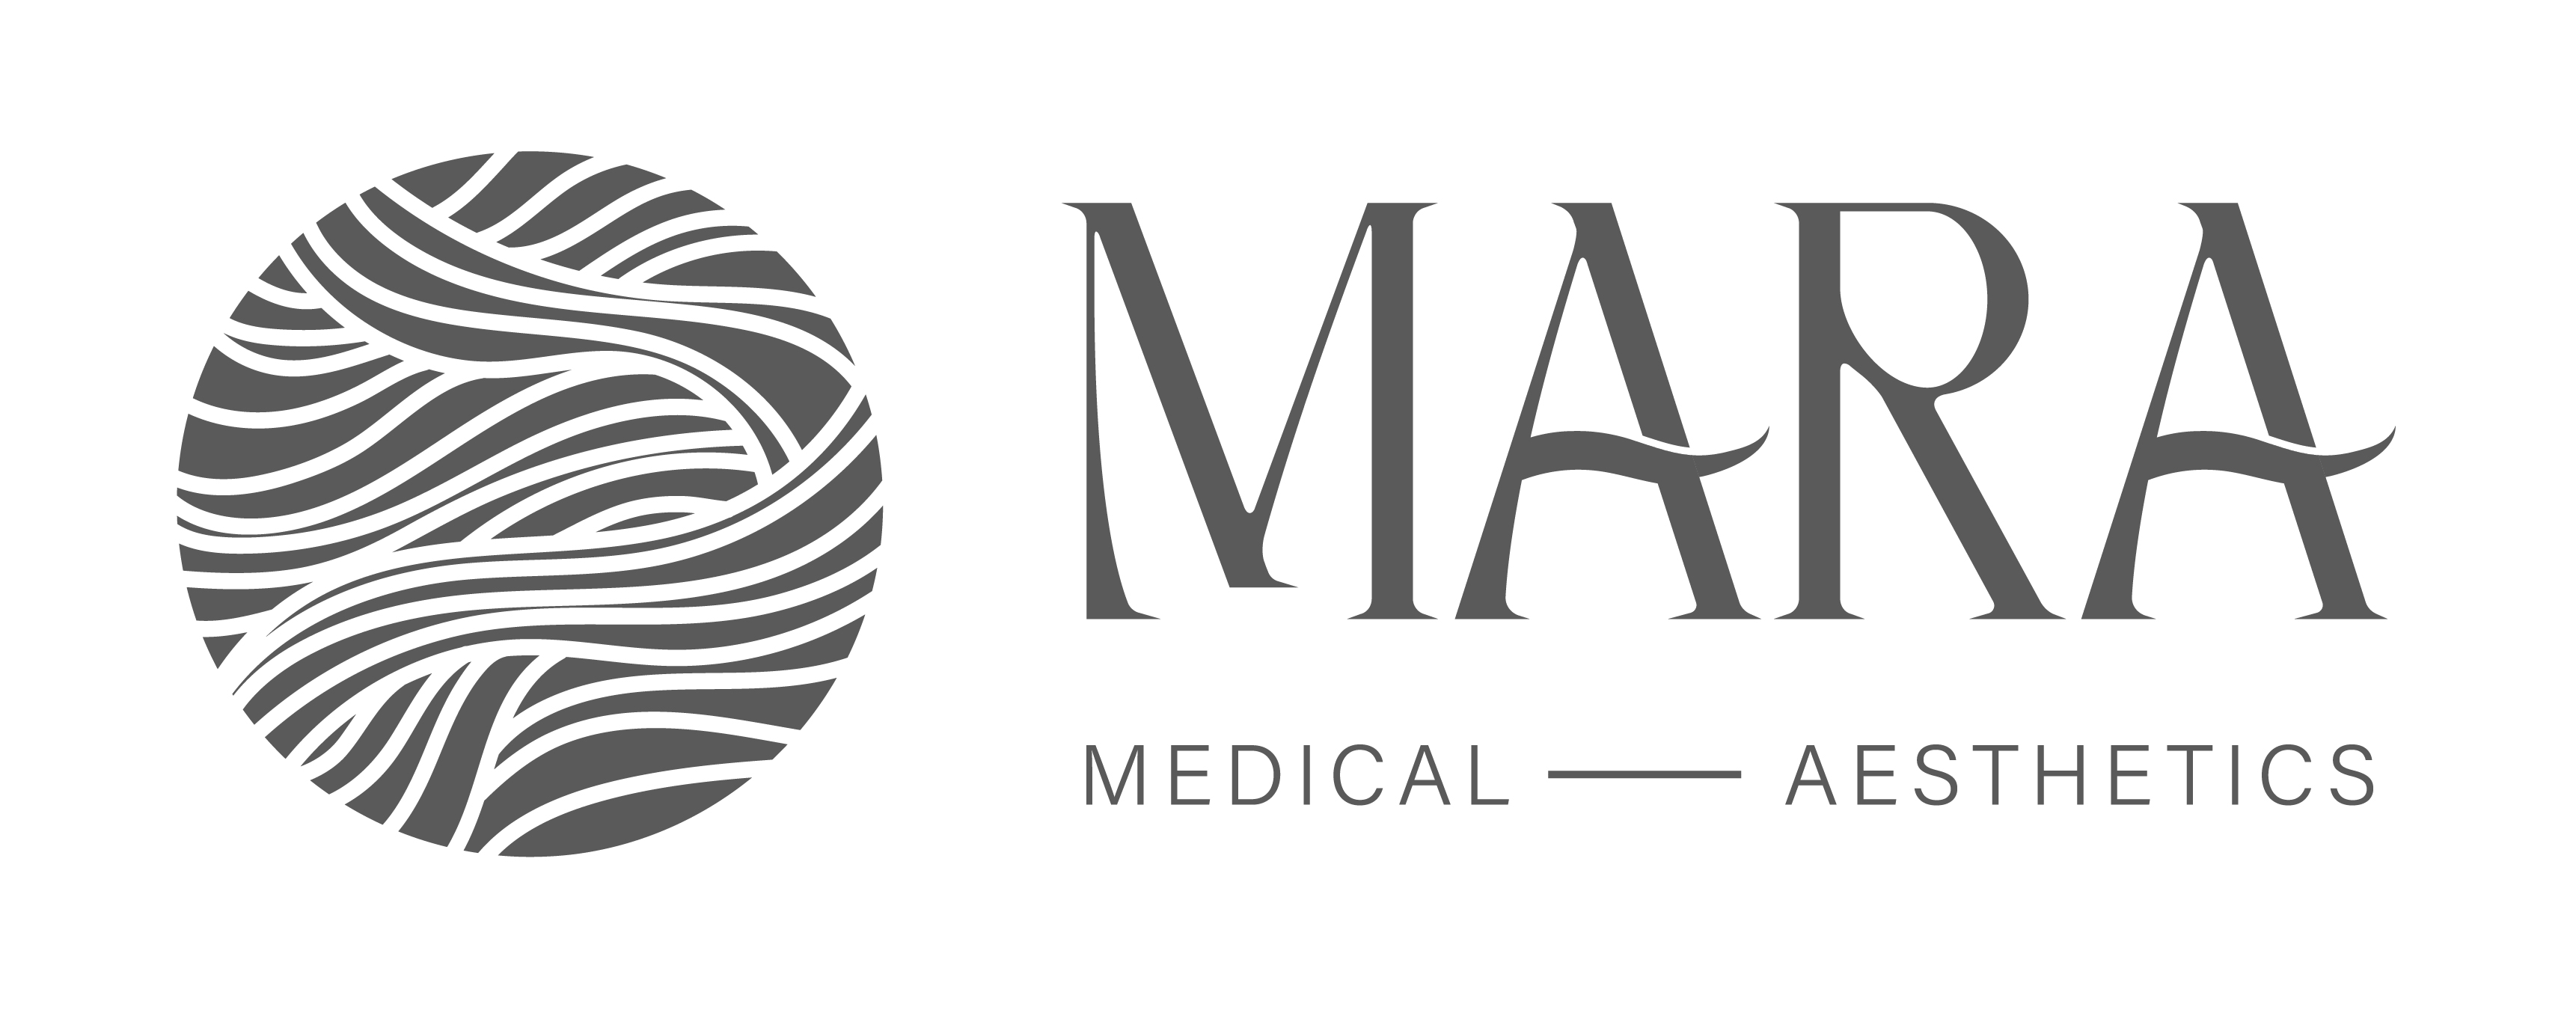 Logo for Mara Medical - Aesthetics